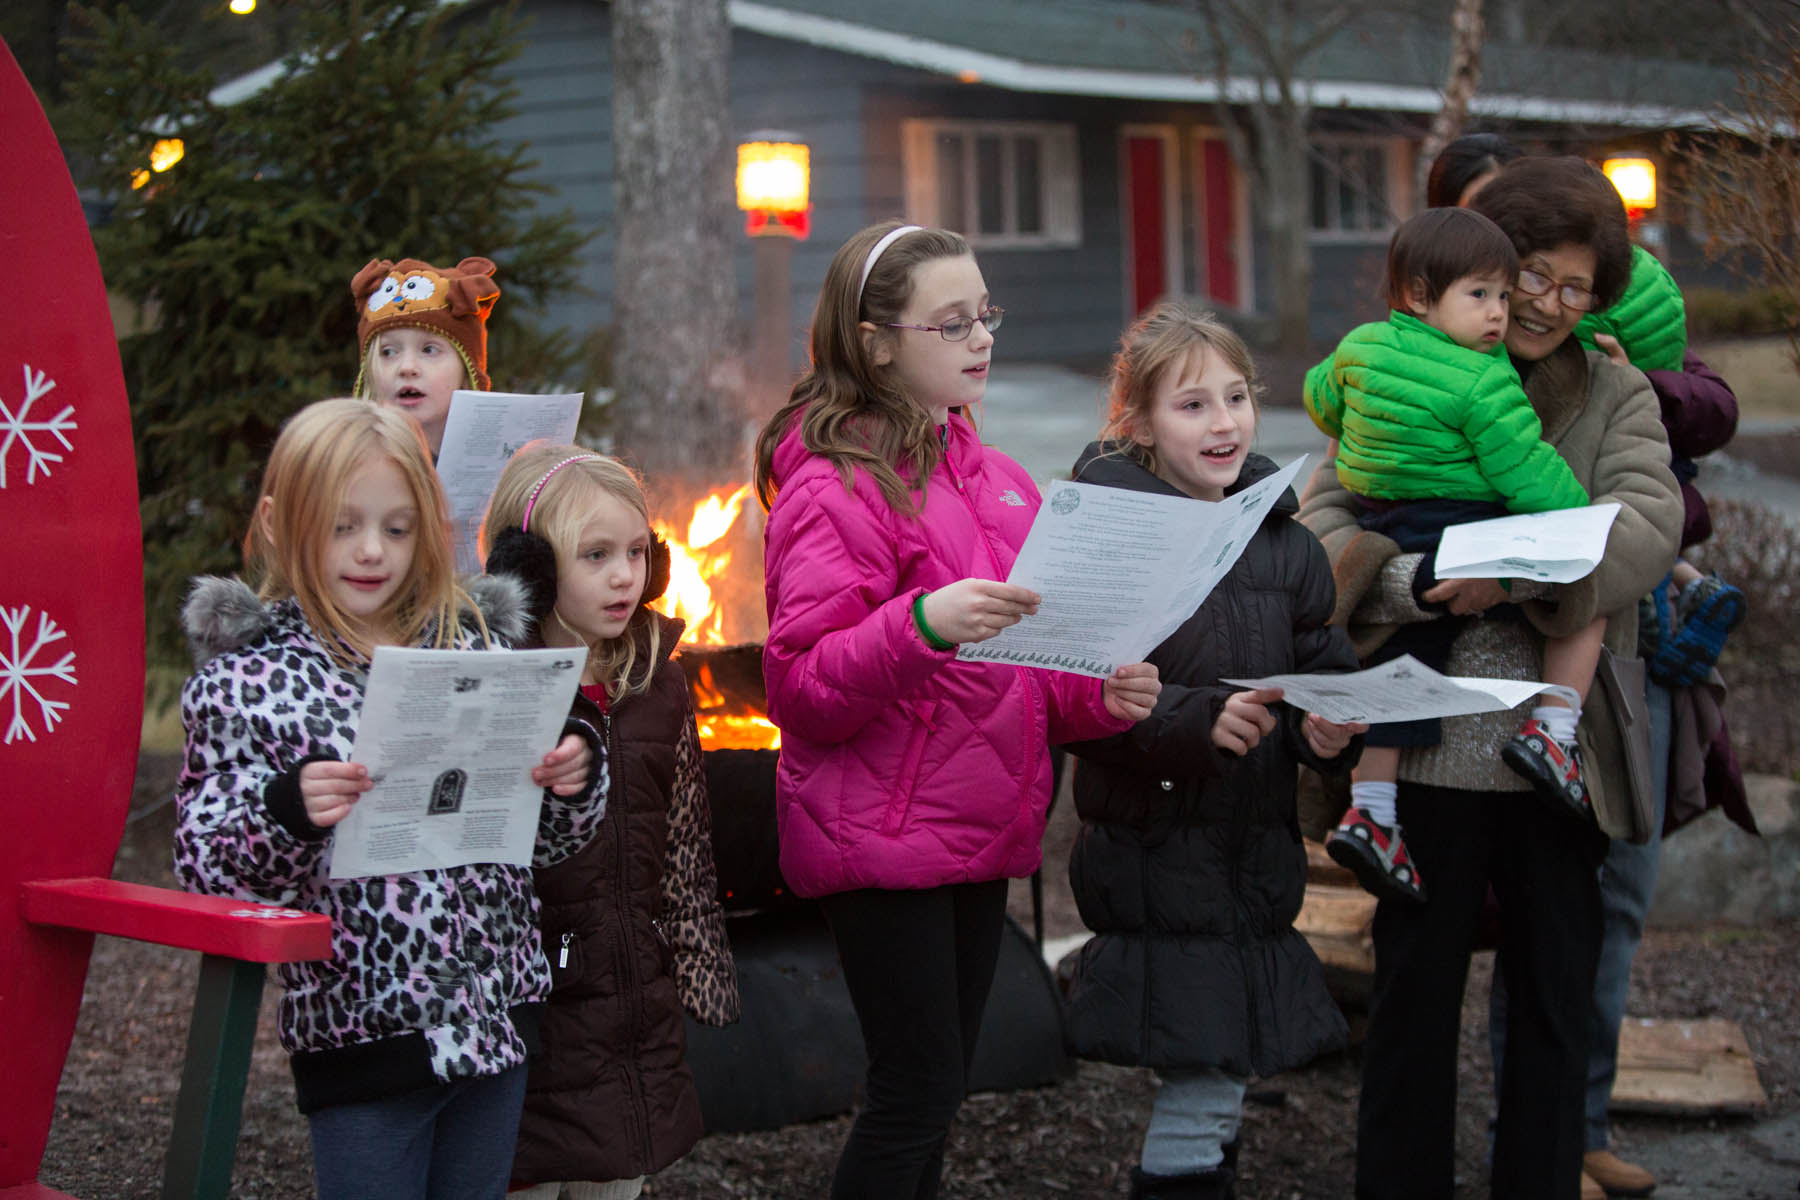 Children outdoors singing Christmas carols.